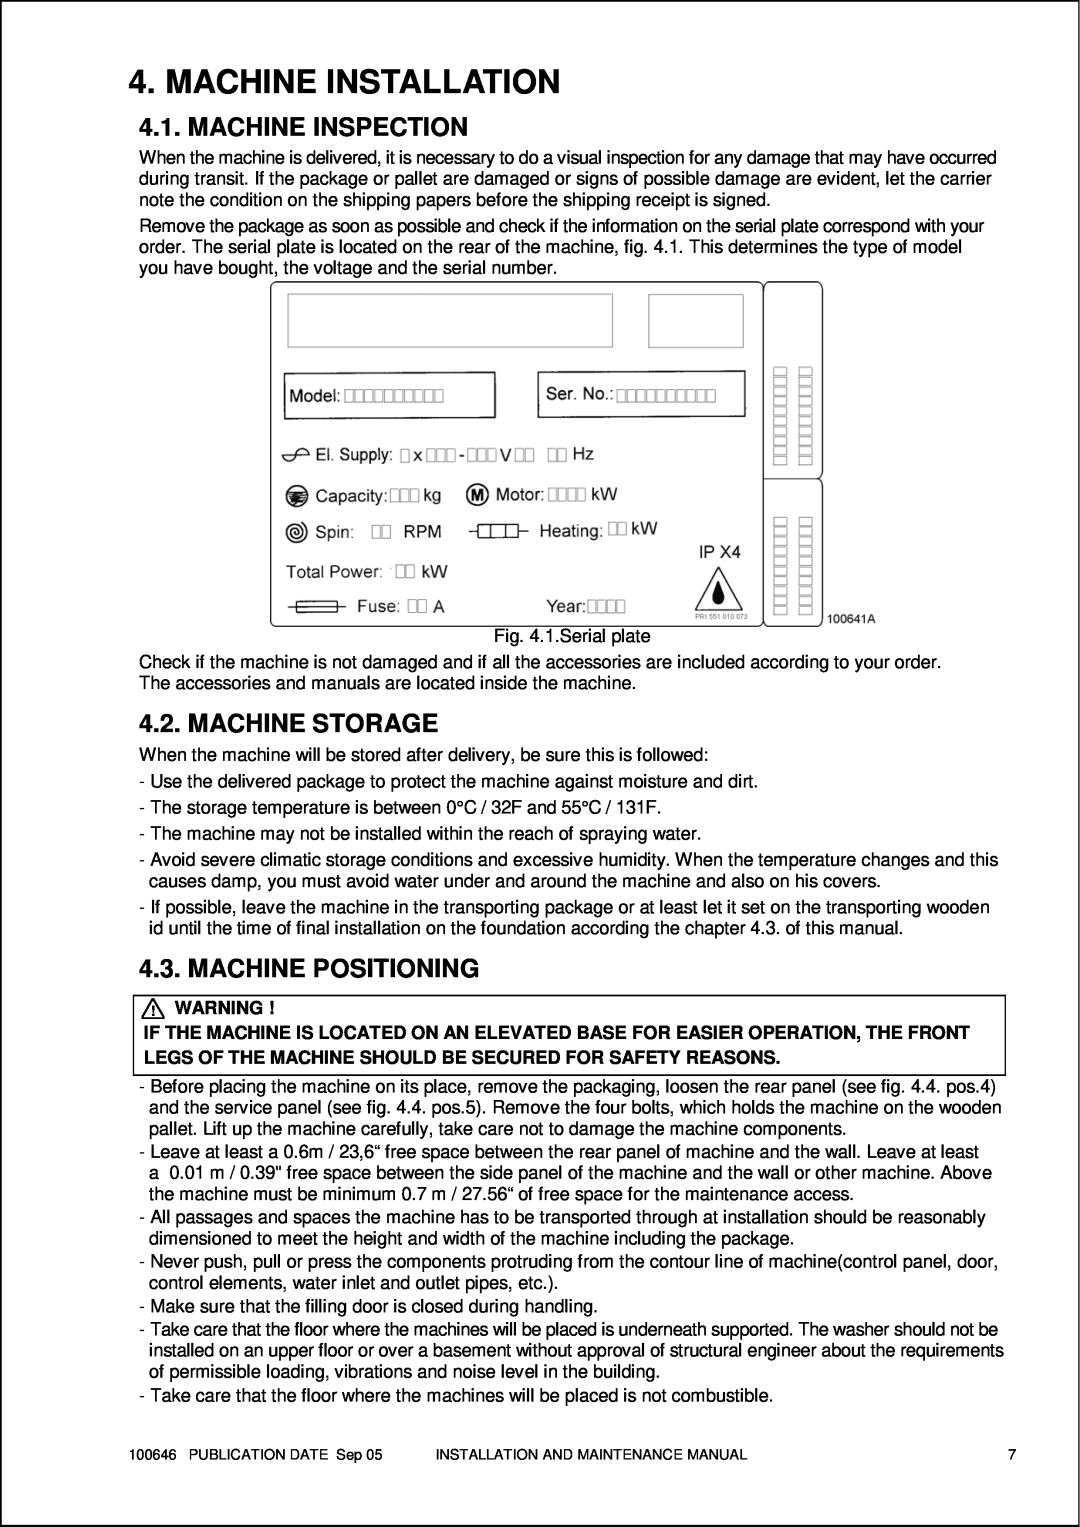 Maytag MFS 25-35 manual Machine Installation, Machine Inspection, Machine Storage, Machine Positioning 